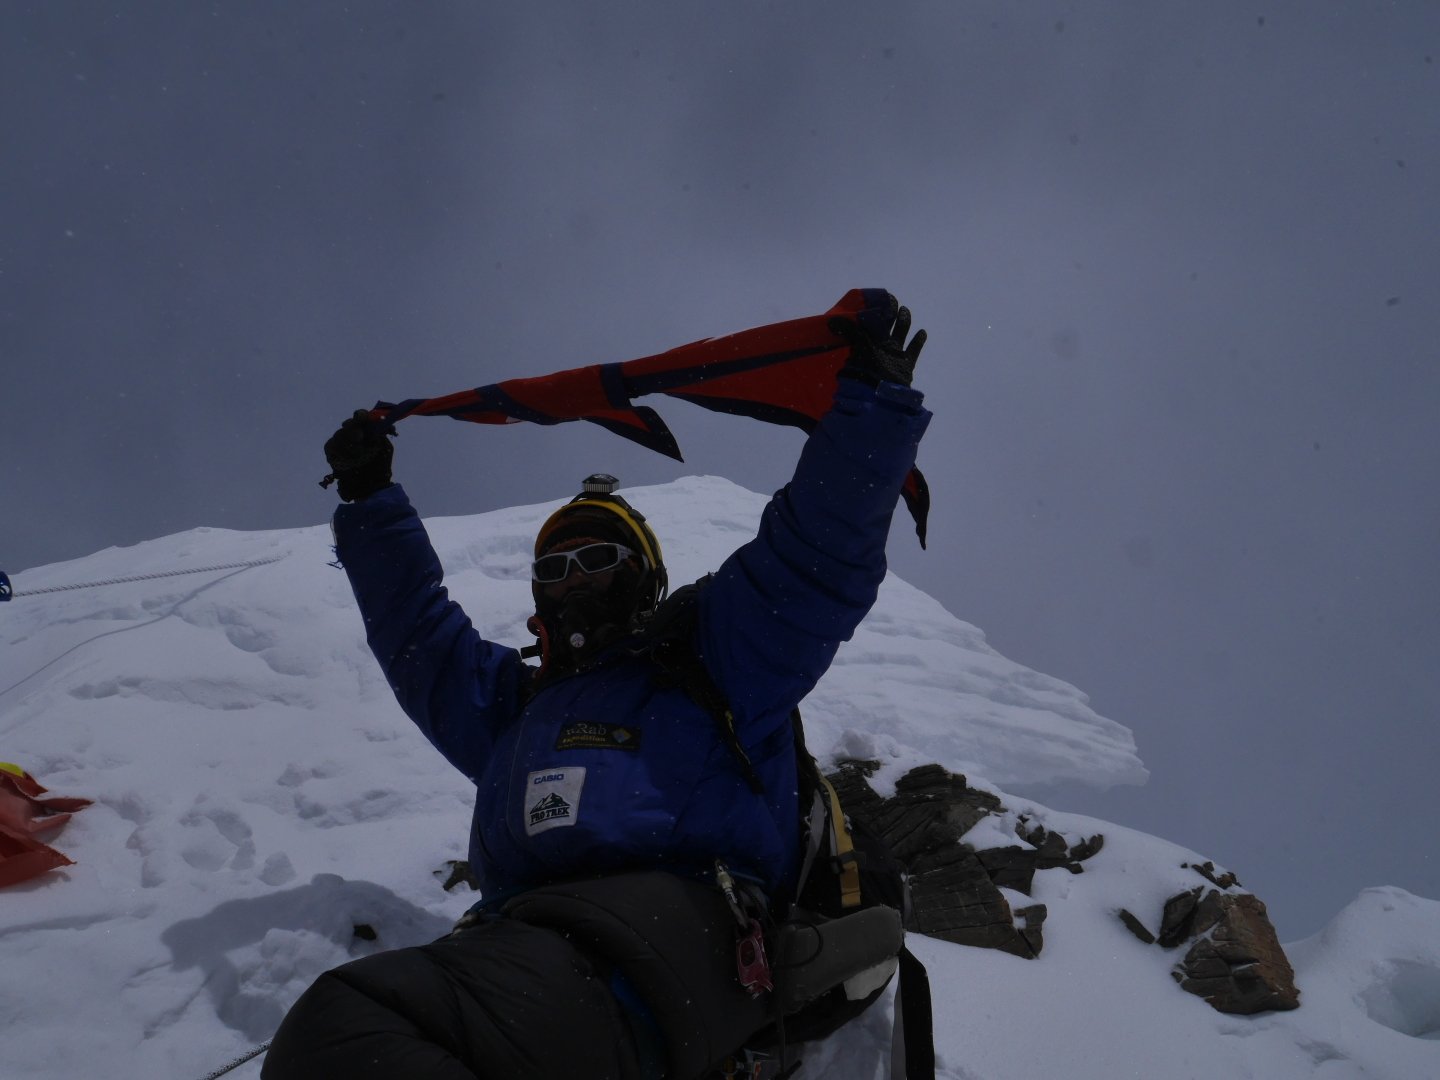 Lhotse 8516 climbing expedition- 2018